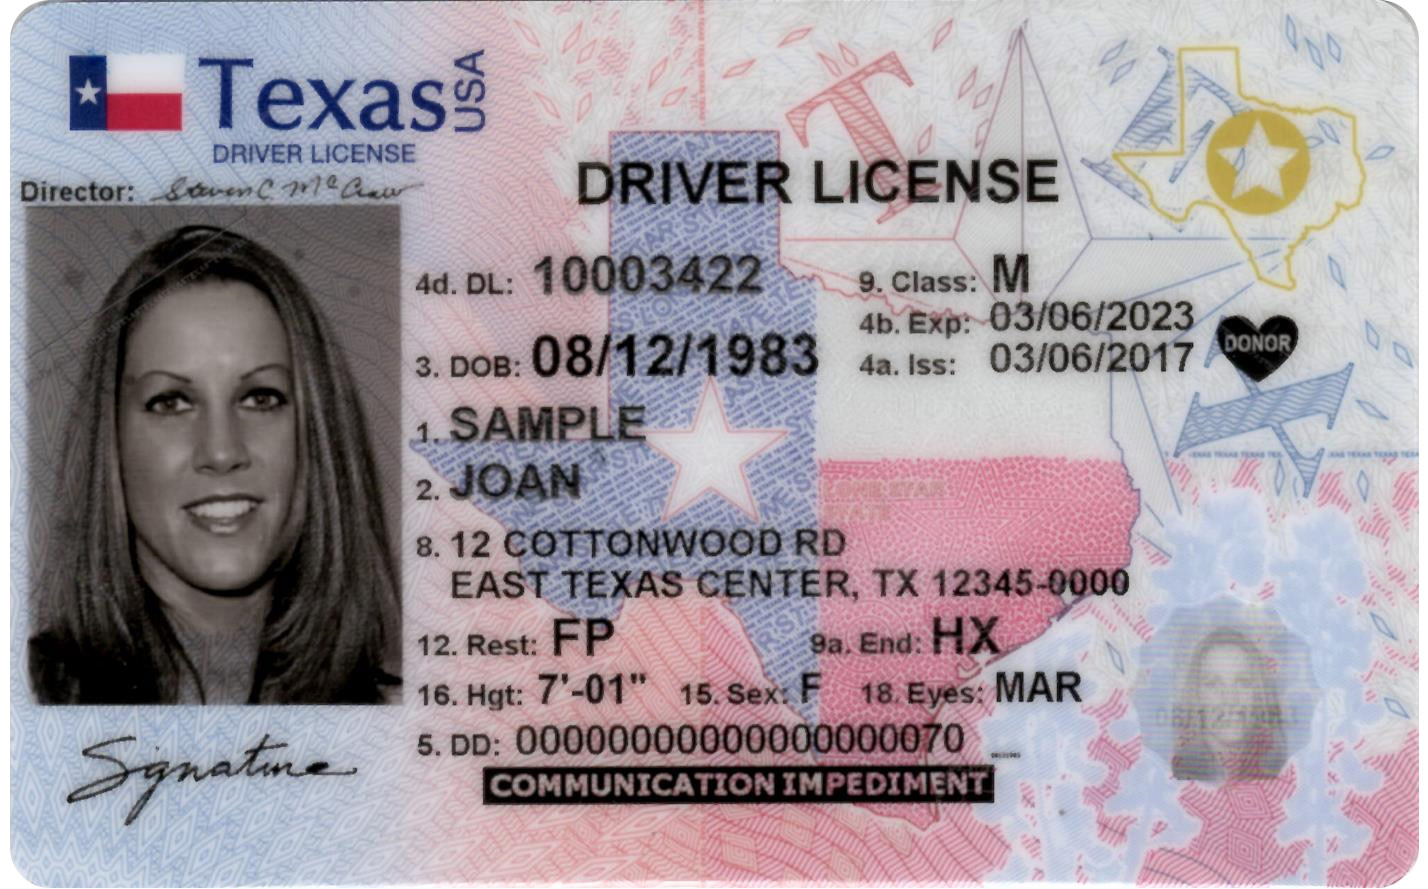 Texas driver license image